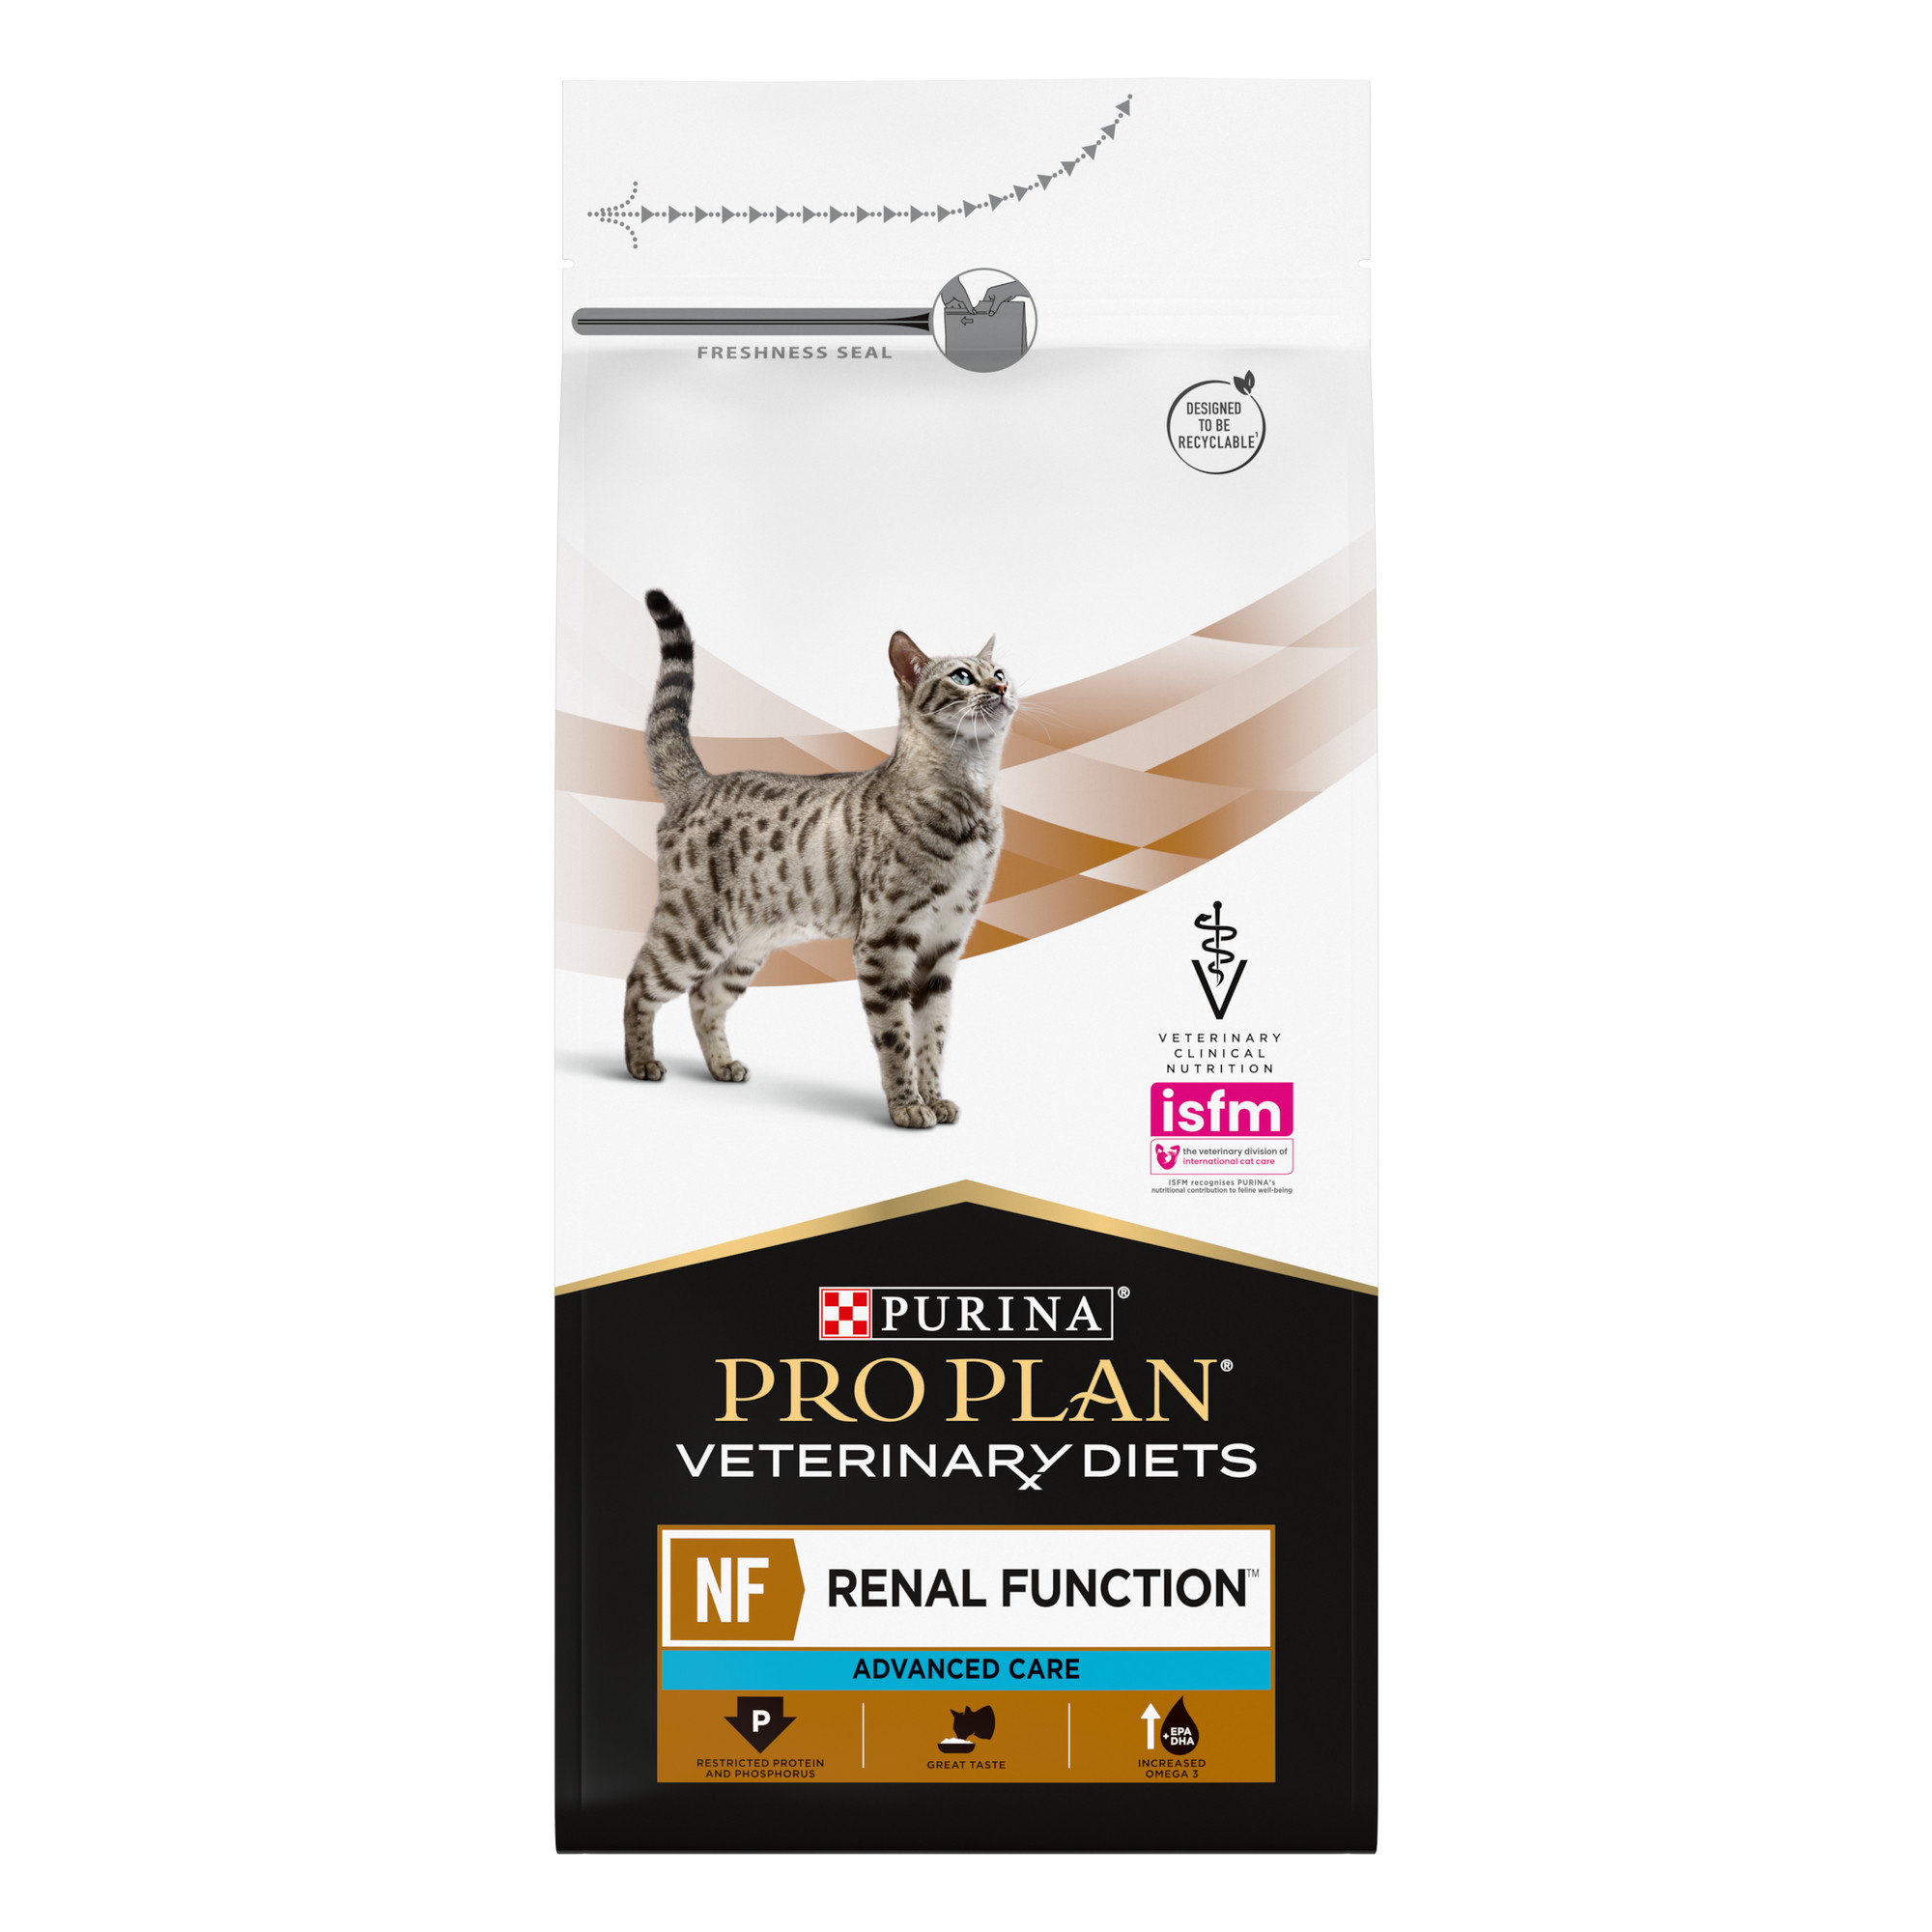 Сухой корм для кошек Pro Plan Veterinary Diets NF Advanced care при патологии почек, 1,5кг